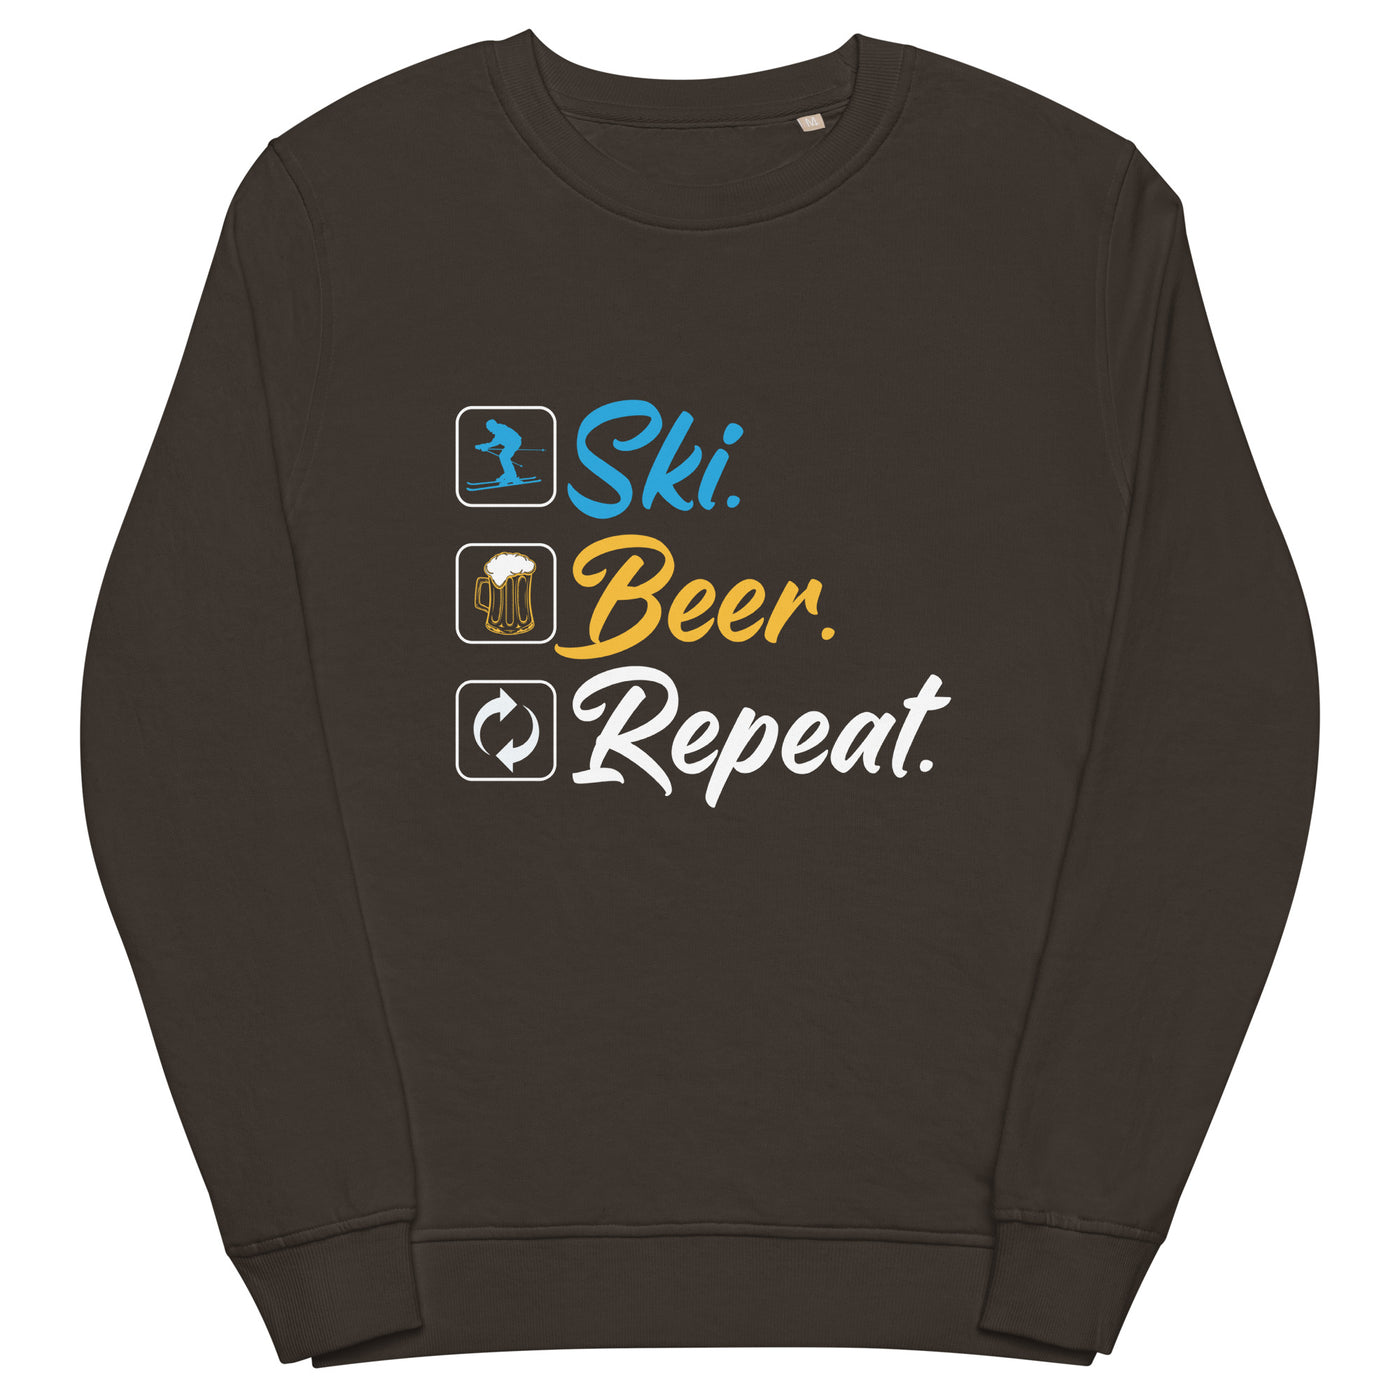 Ski. Bär. Repeat. - (S.K) - Unisex Premium Organic Sweatshirt klettern xxx yyy zzz Deep Charcoal Grey